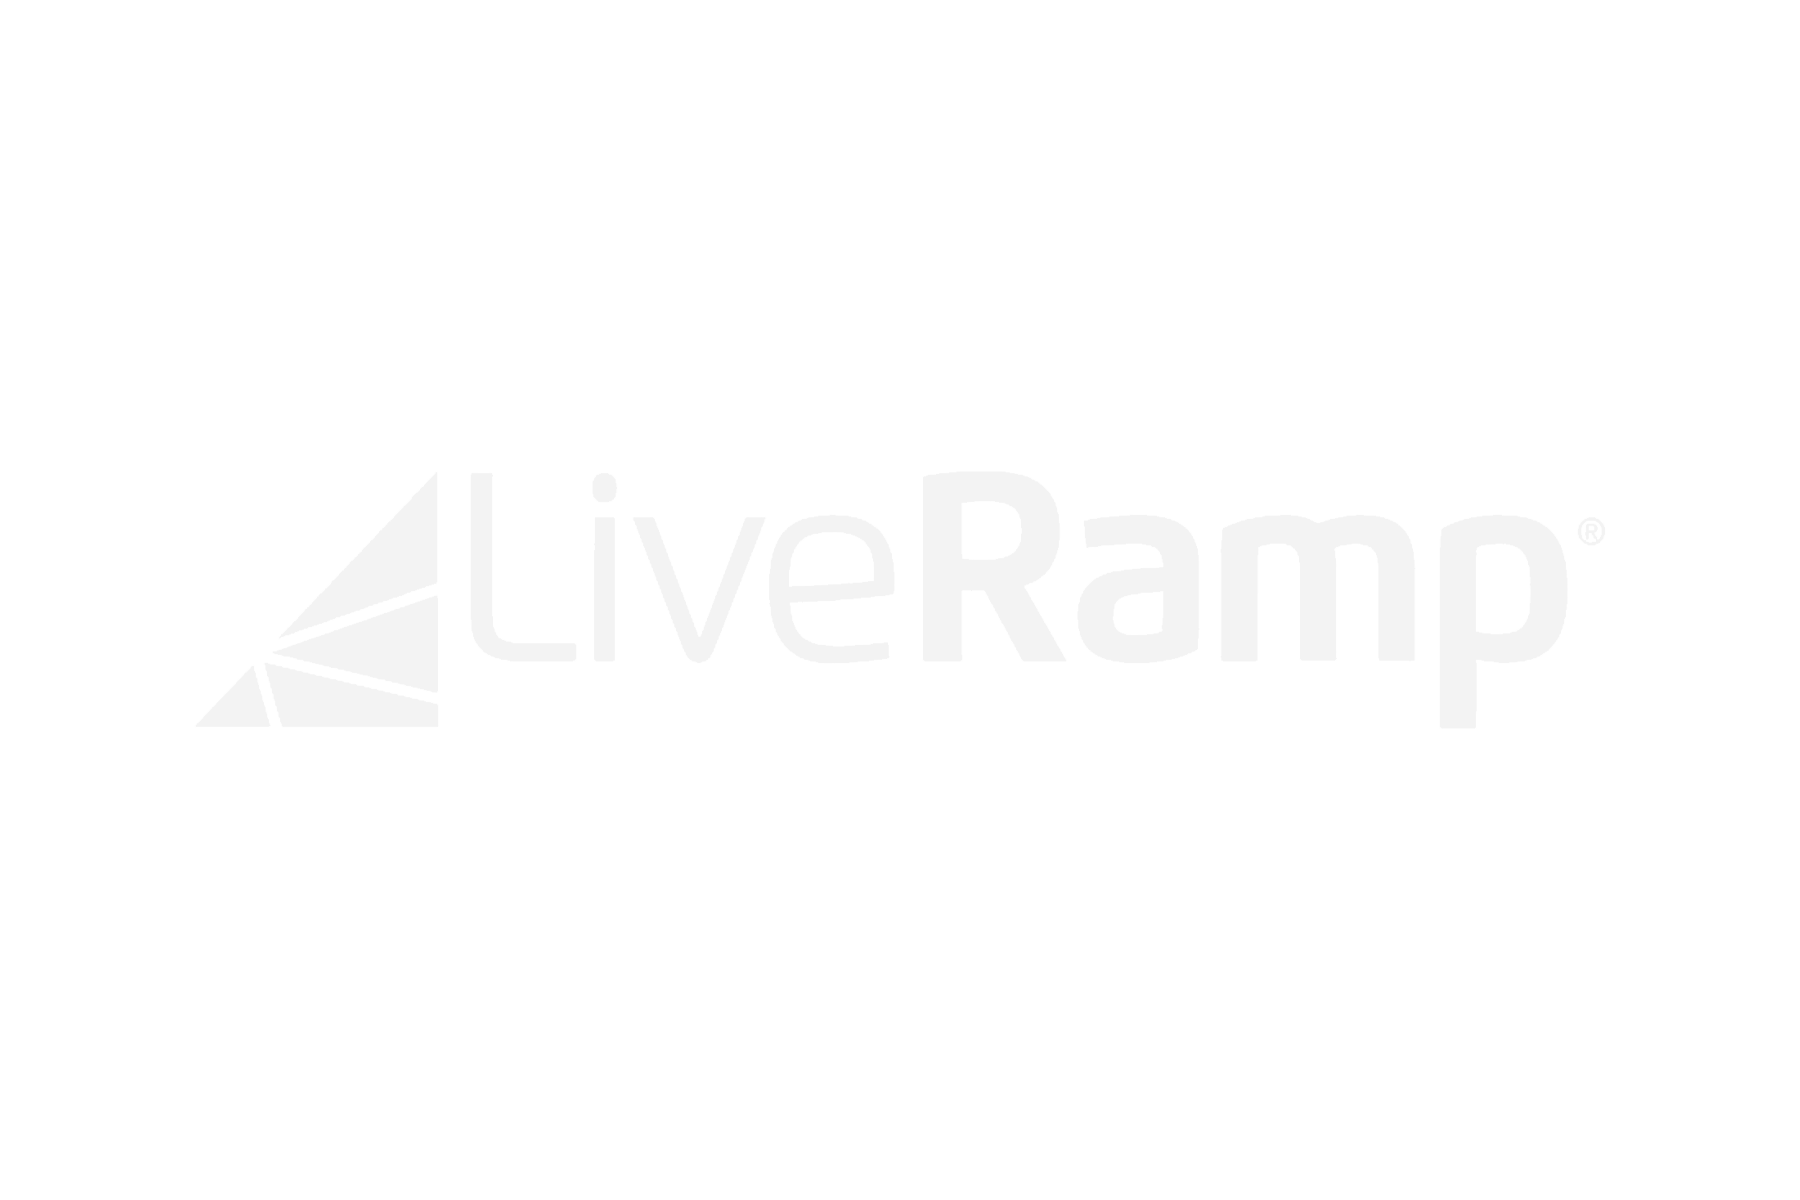 Live Ramp (Copy) (Copy)